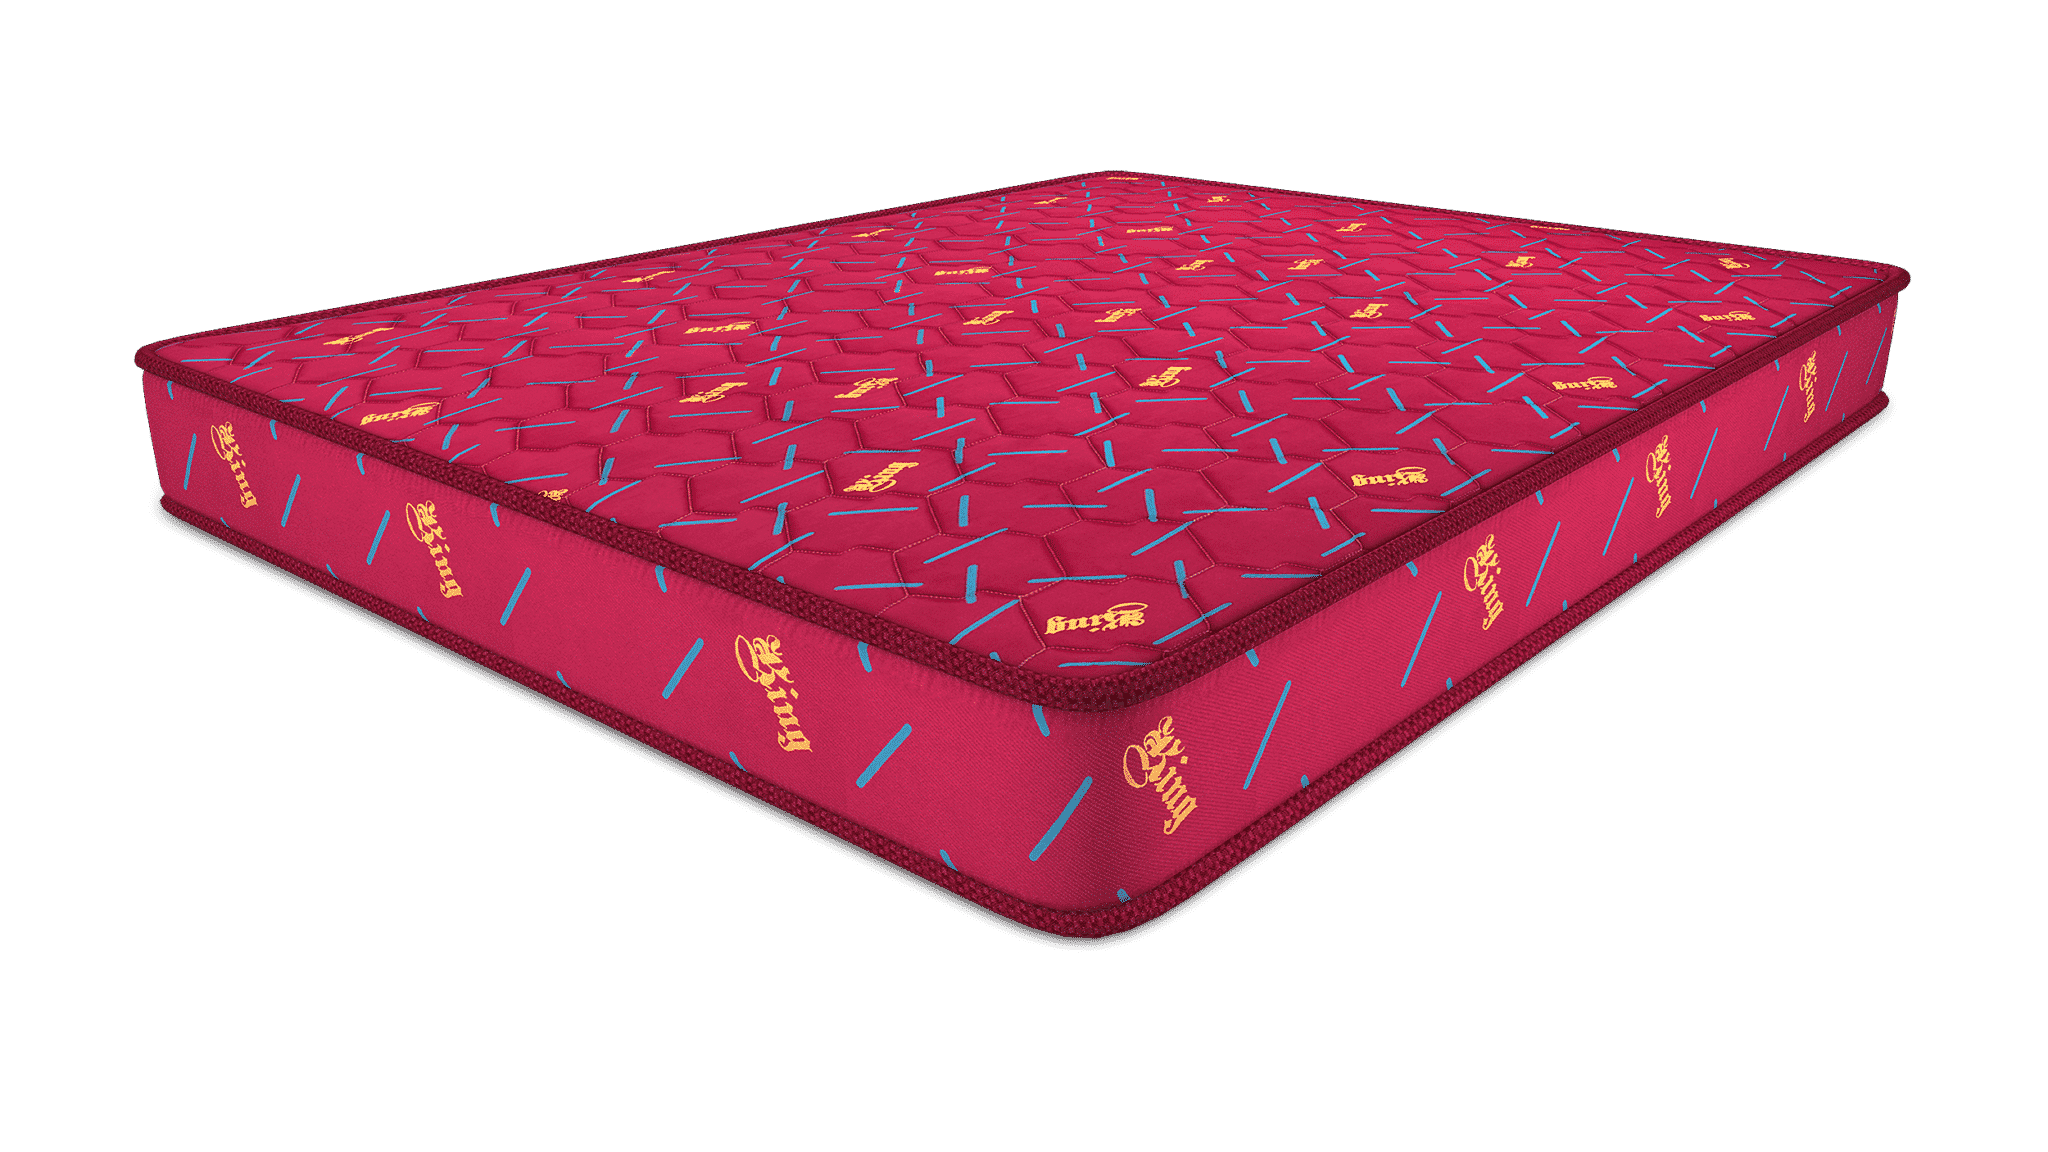 century flexi bond mattress price